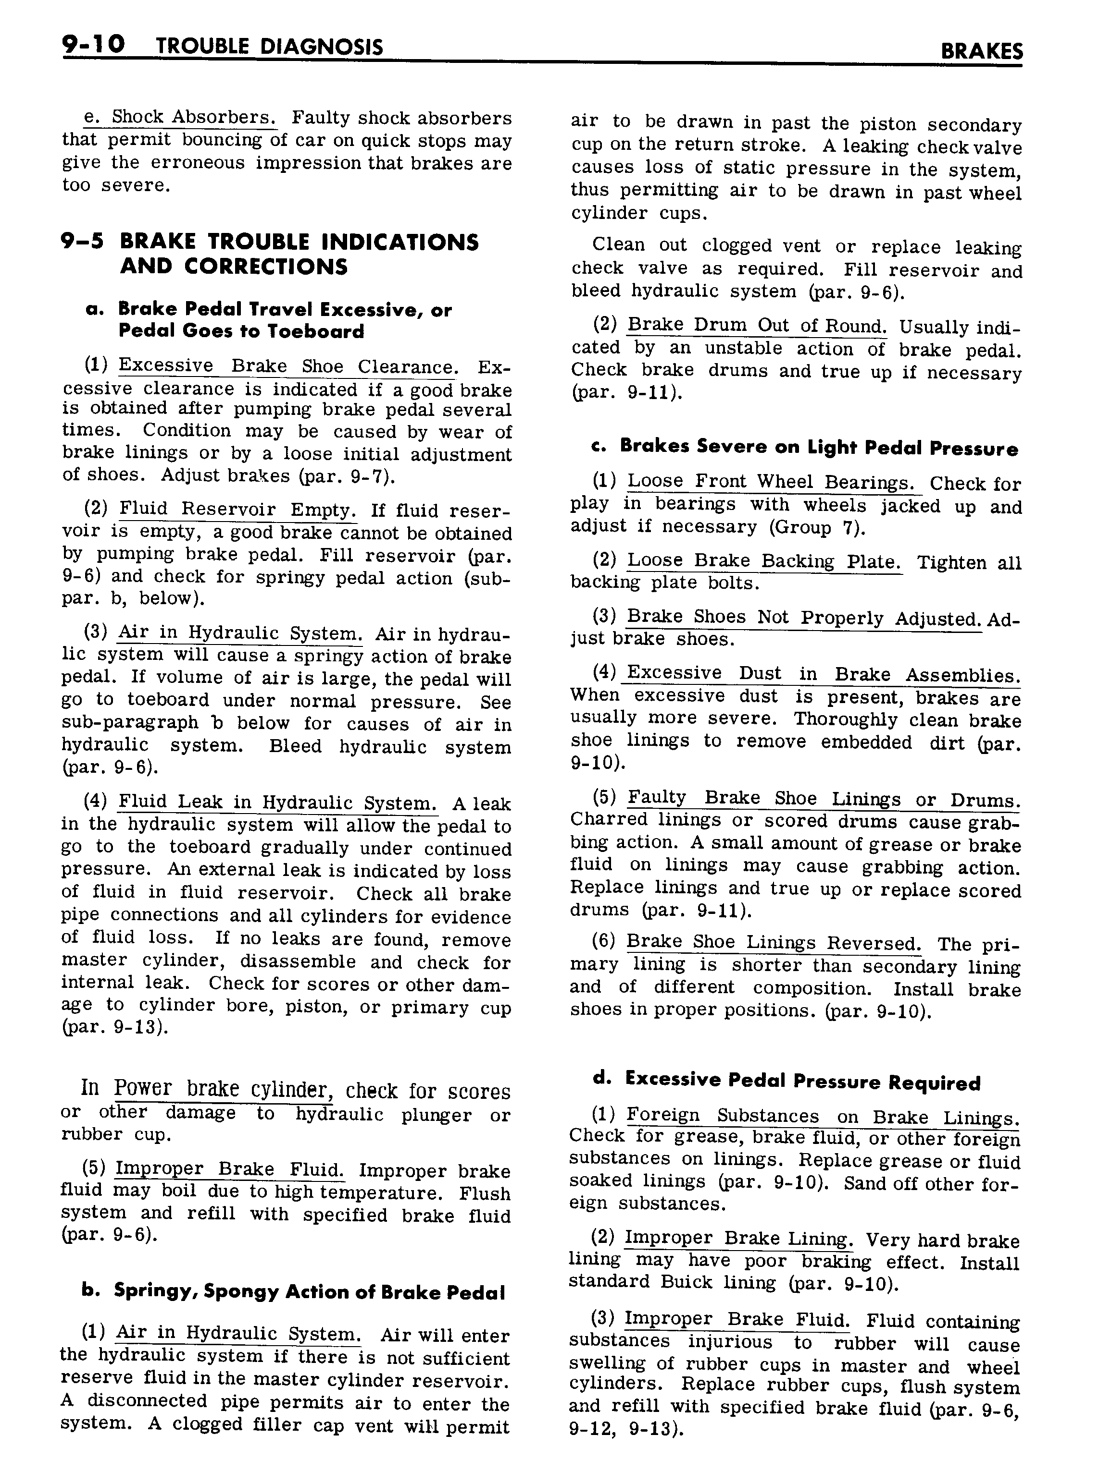 n_09 1961 Buick Shop Manual - Brakes-010-010.jpg